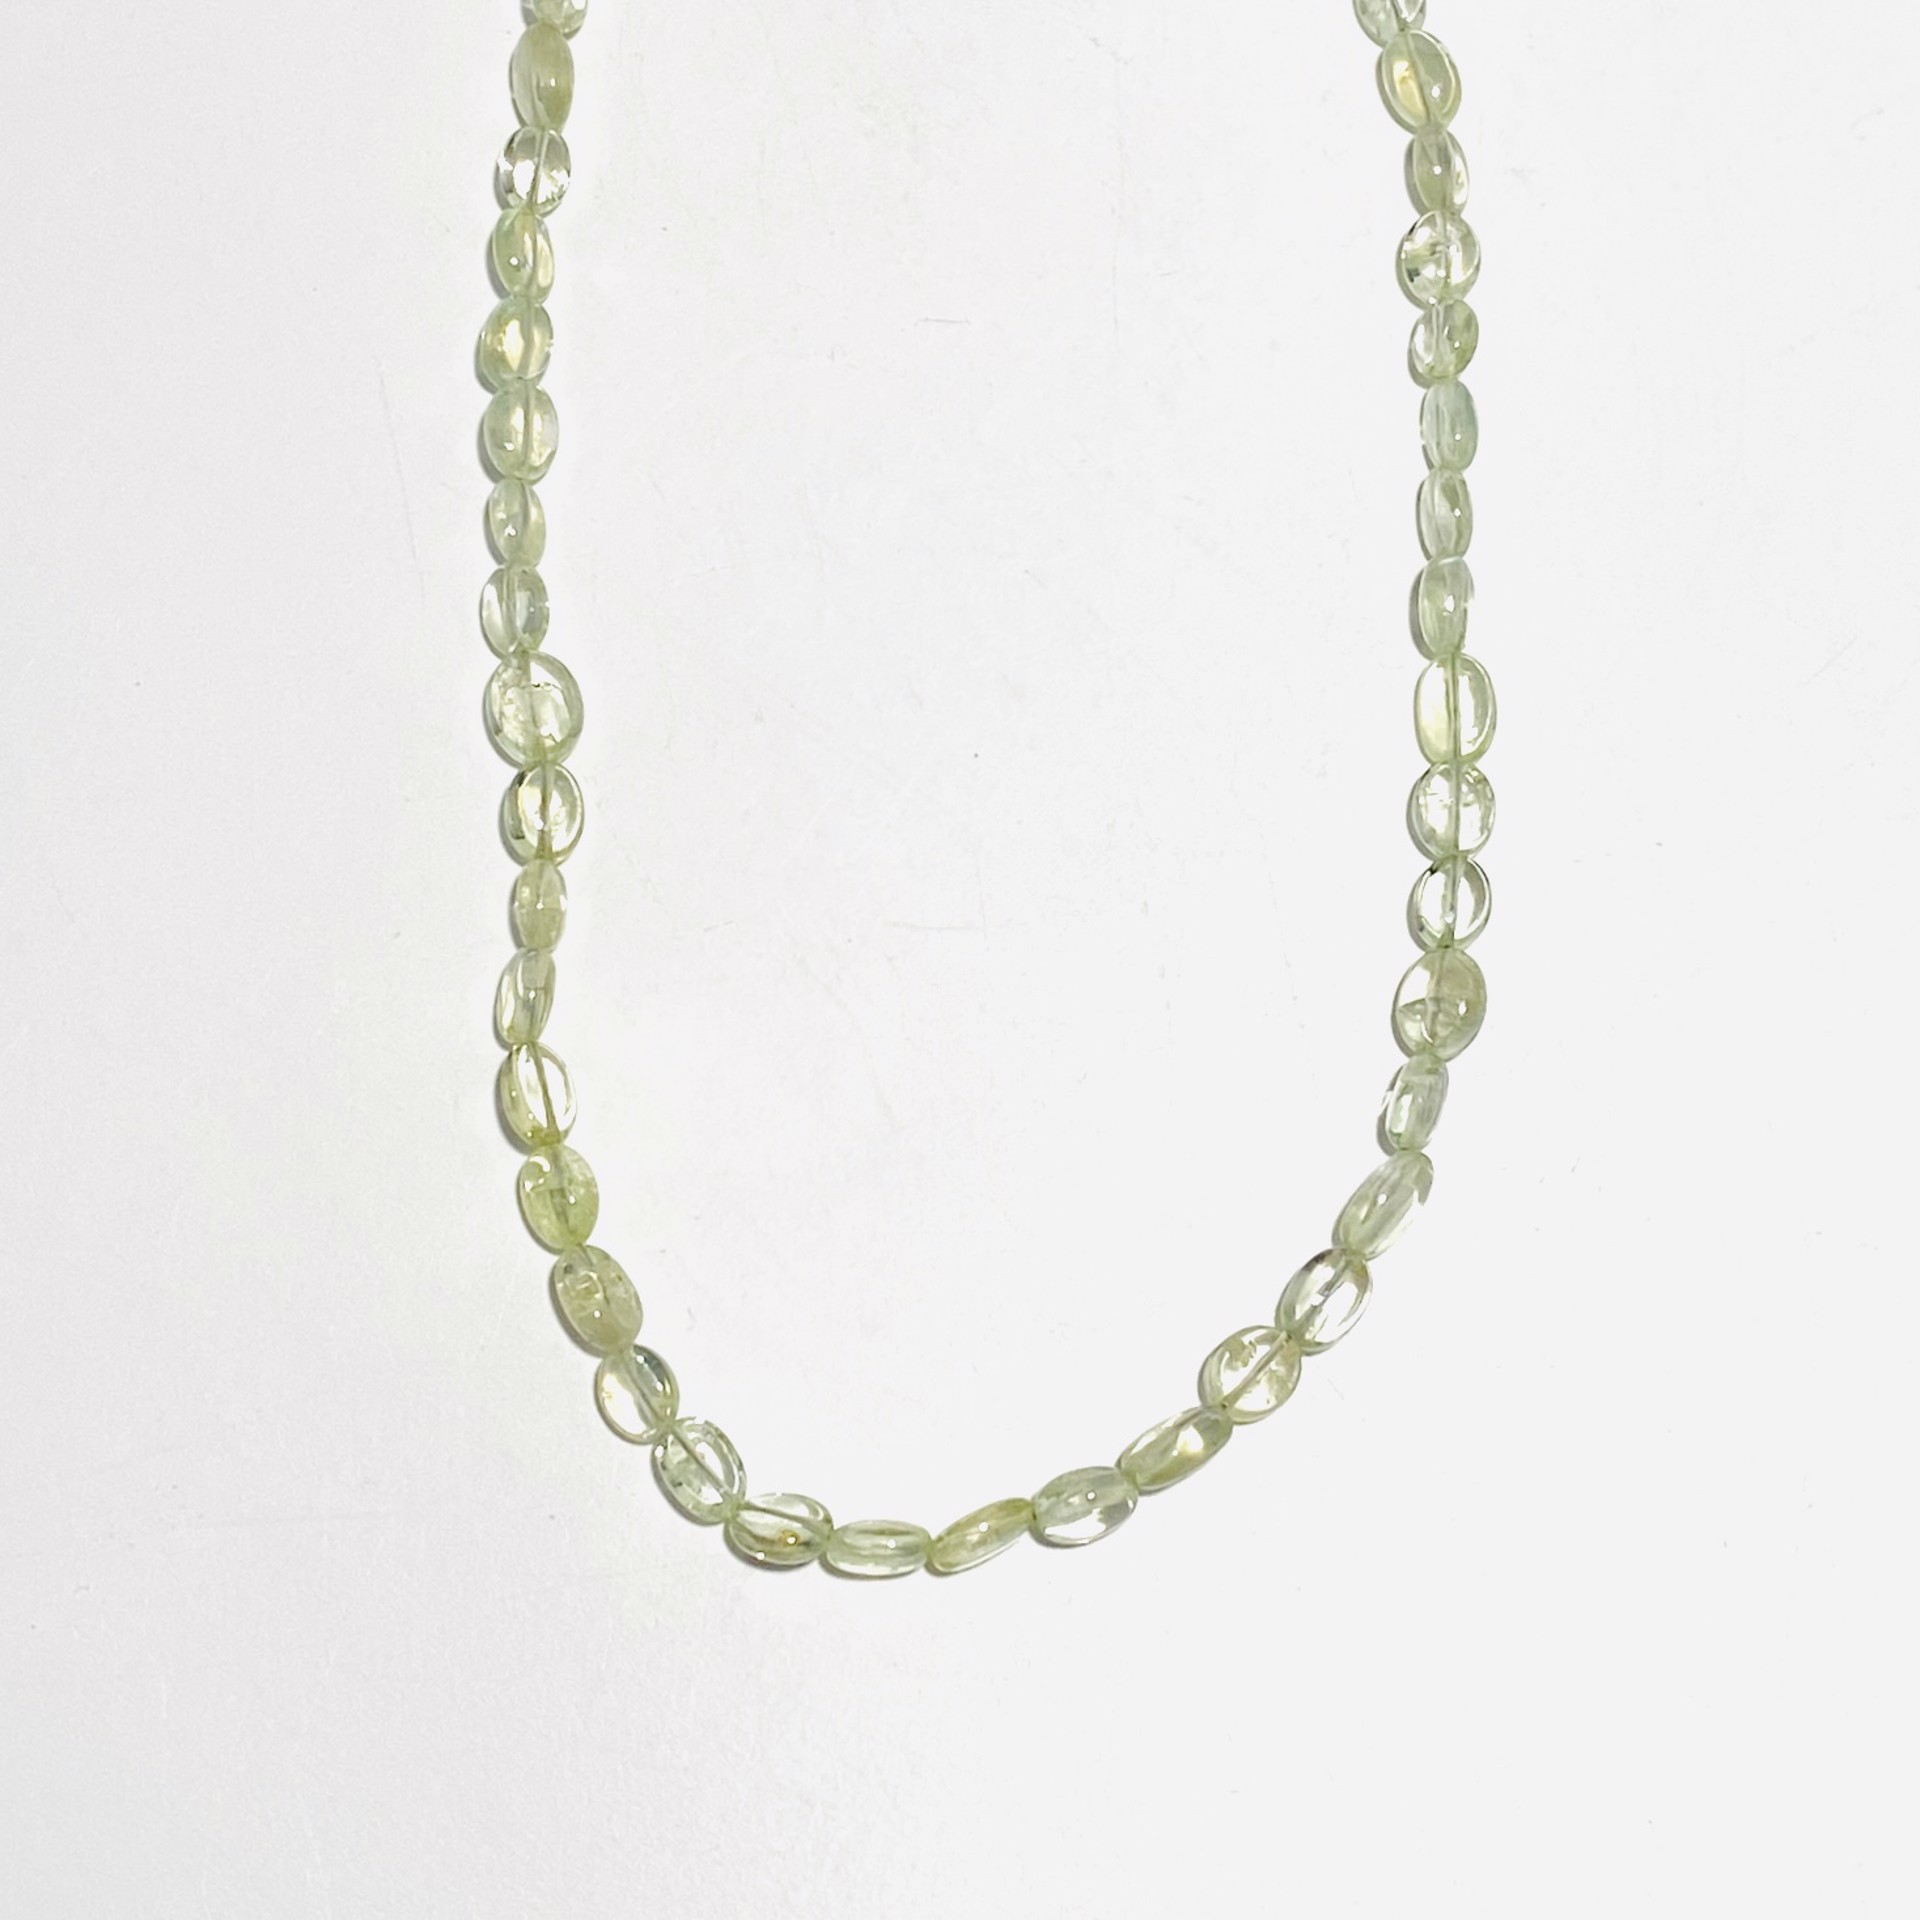 Oval Green Fluorite Bead Strand Necklace NT23-44 by Nance Trueworthy